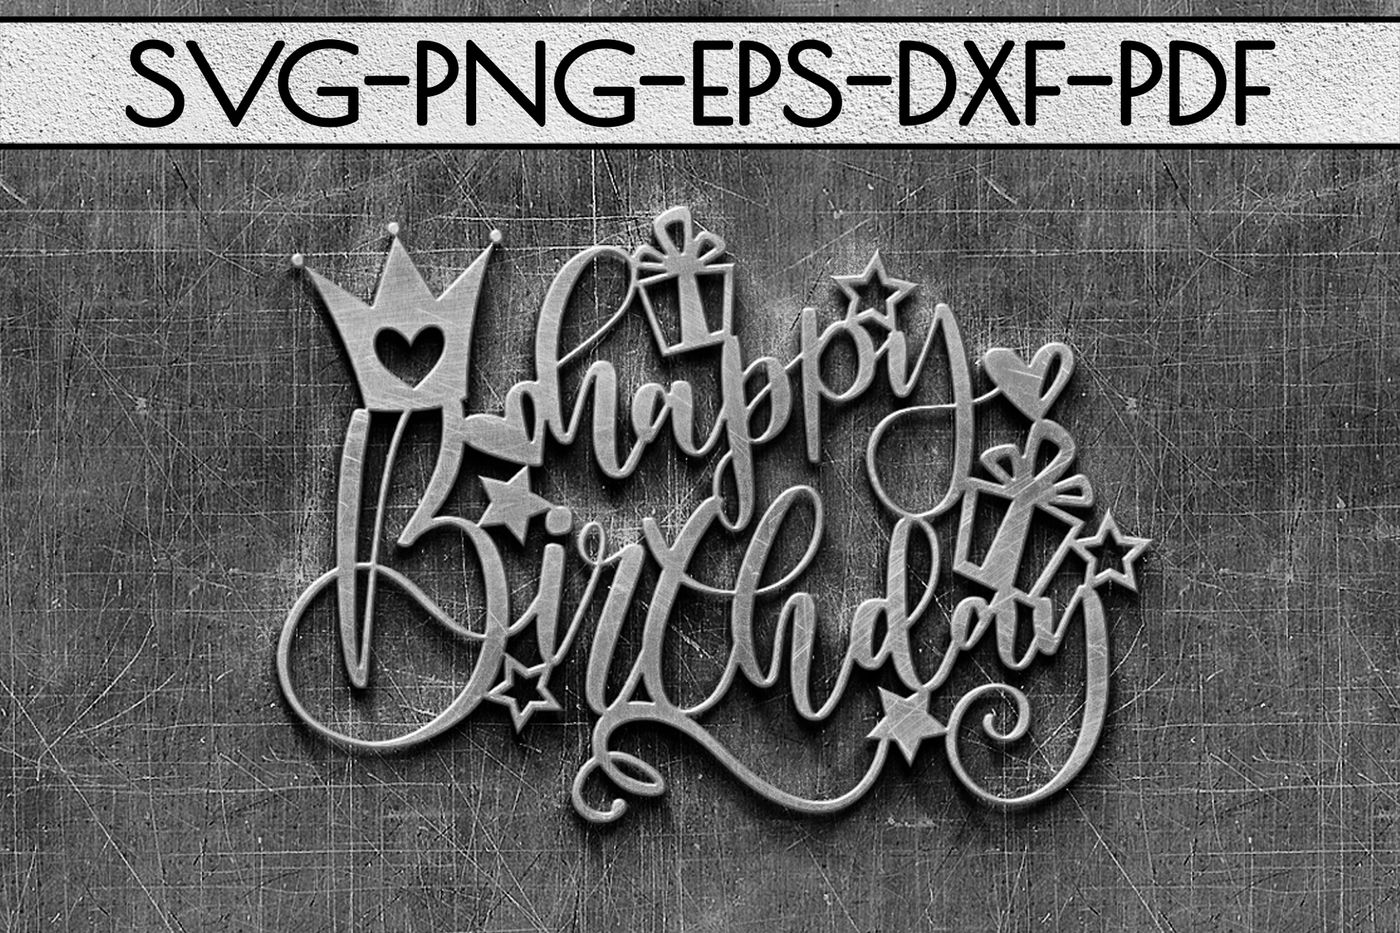 Download Happy Birthday SVG Cutting File, Birthday Card Papercut, DXF PDF By Mulia Designs ...